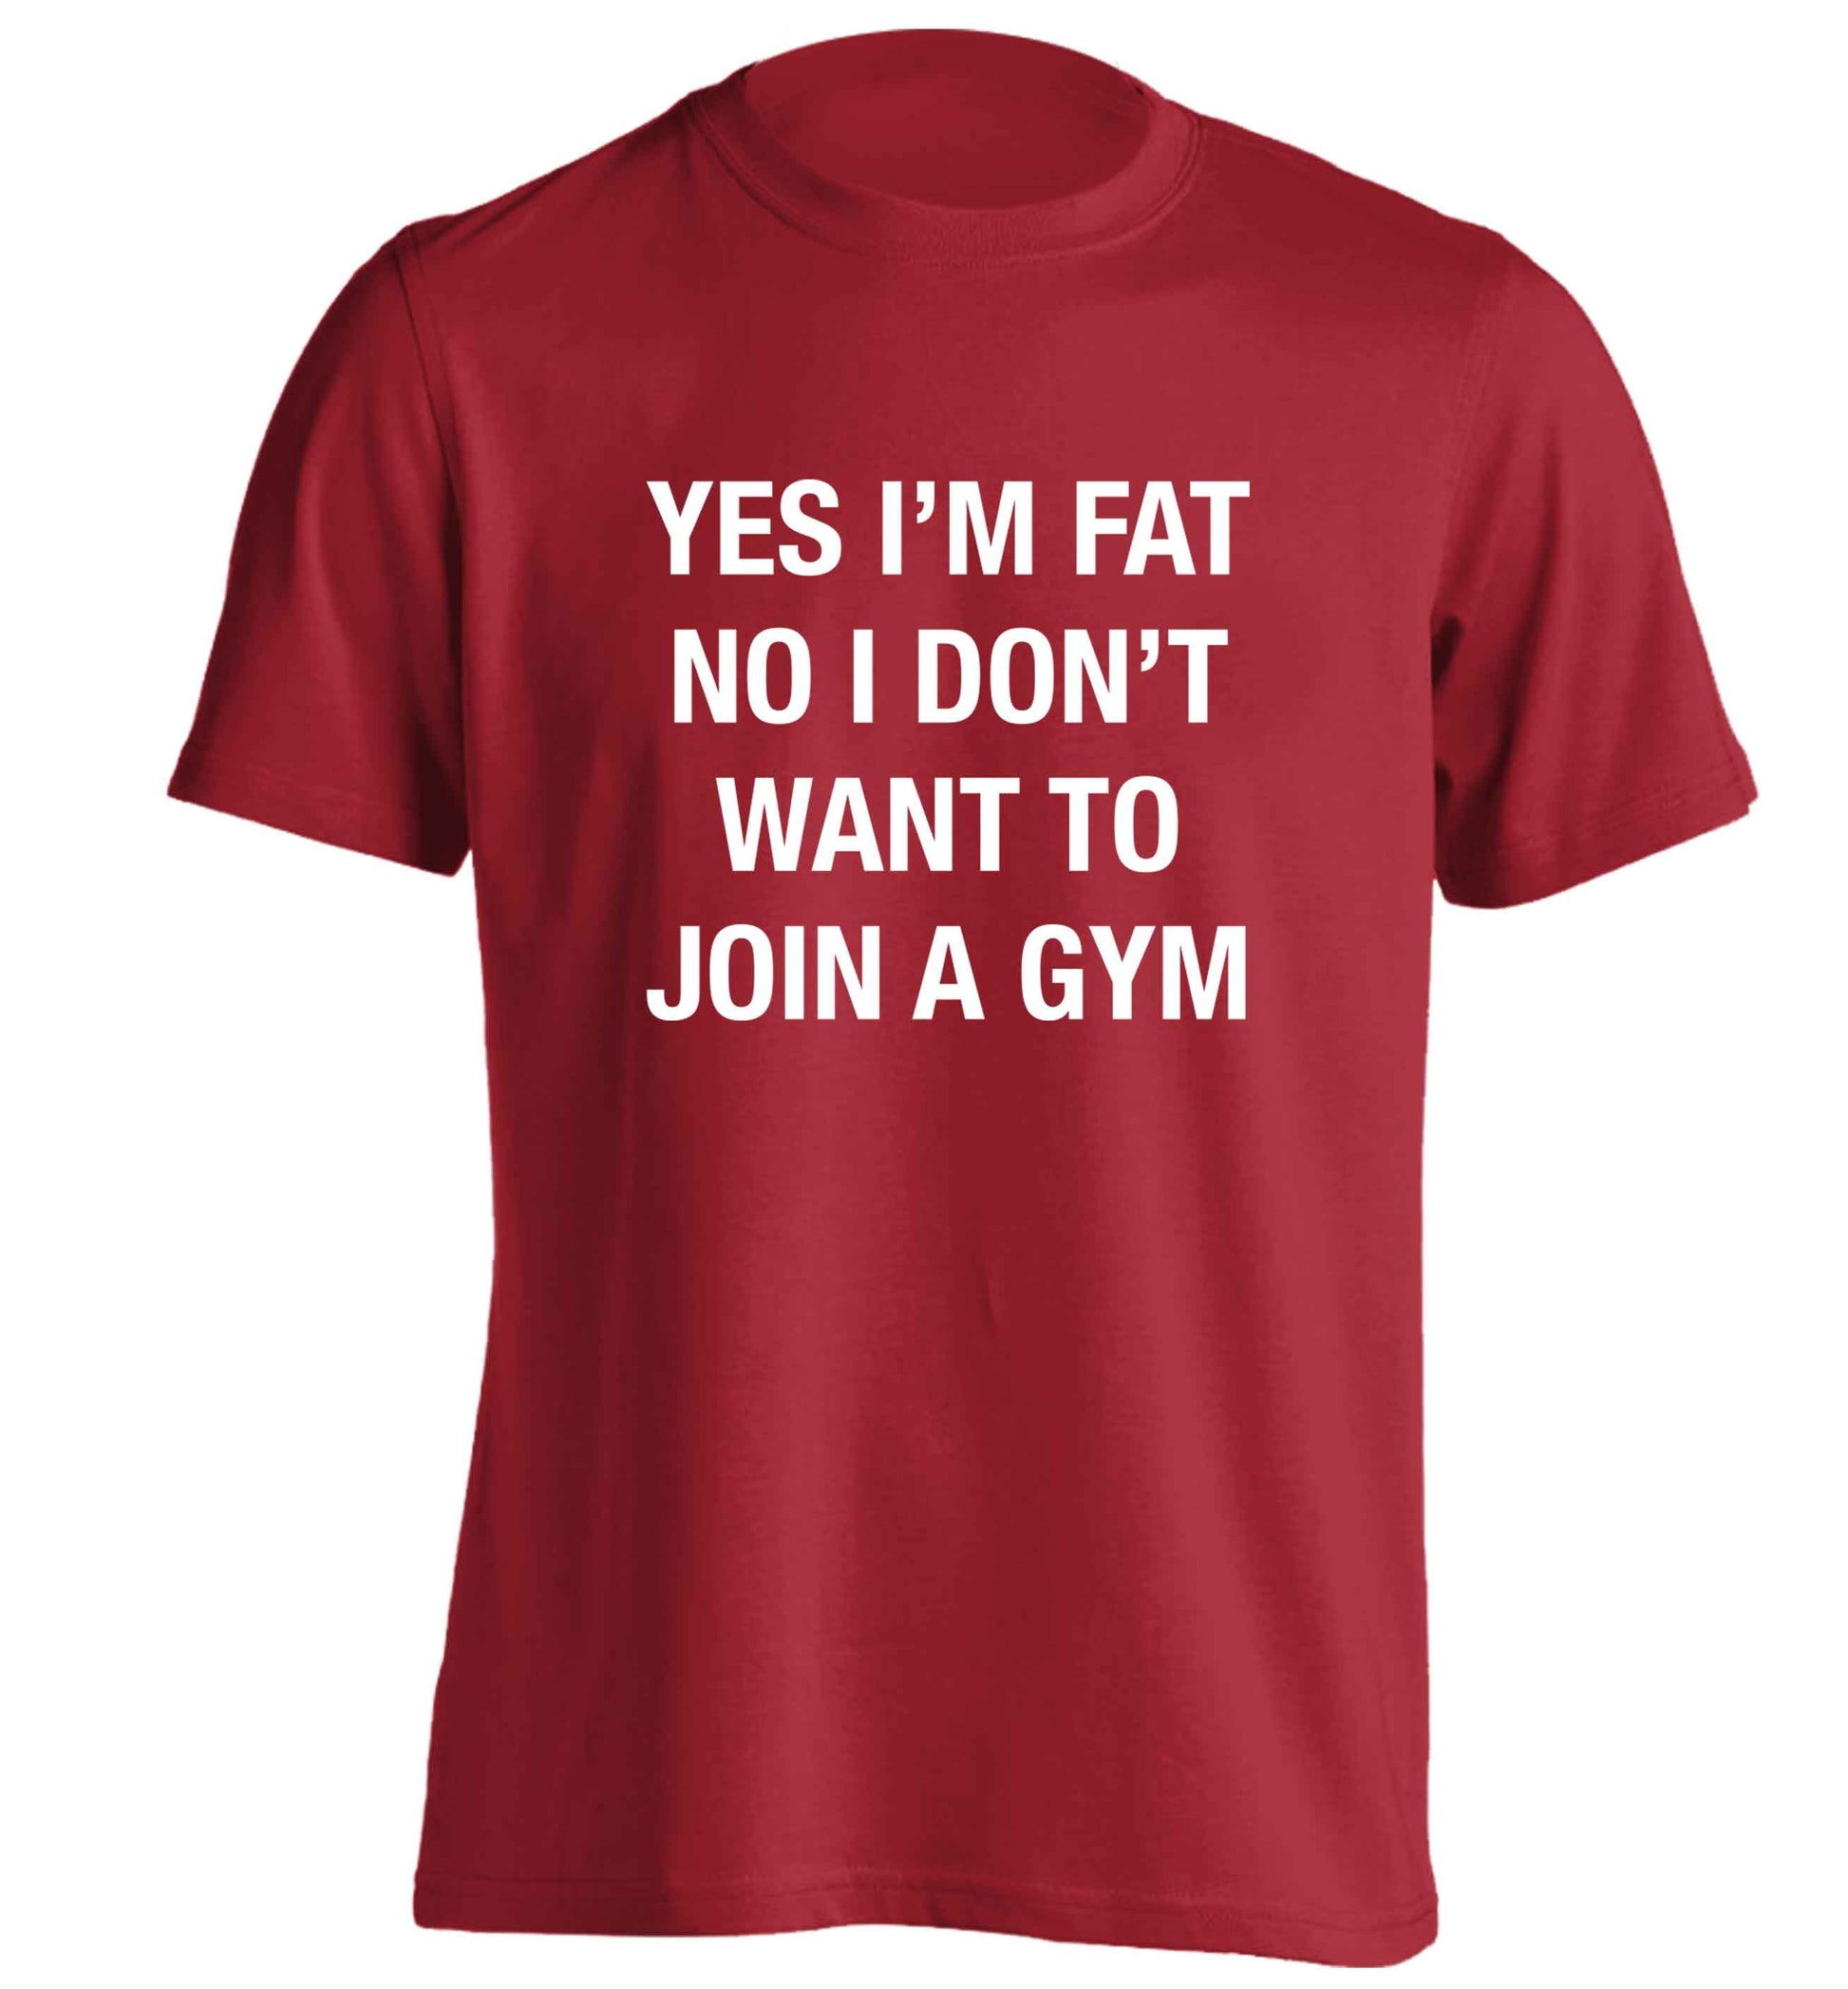 Yes I'm fat, no I don't want to go to the gym adults unisex red Tshirt 2XL